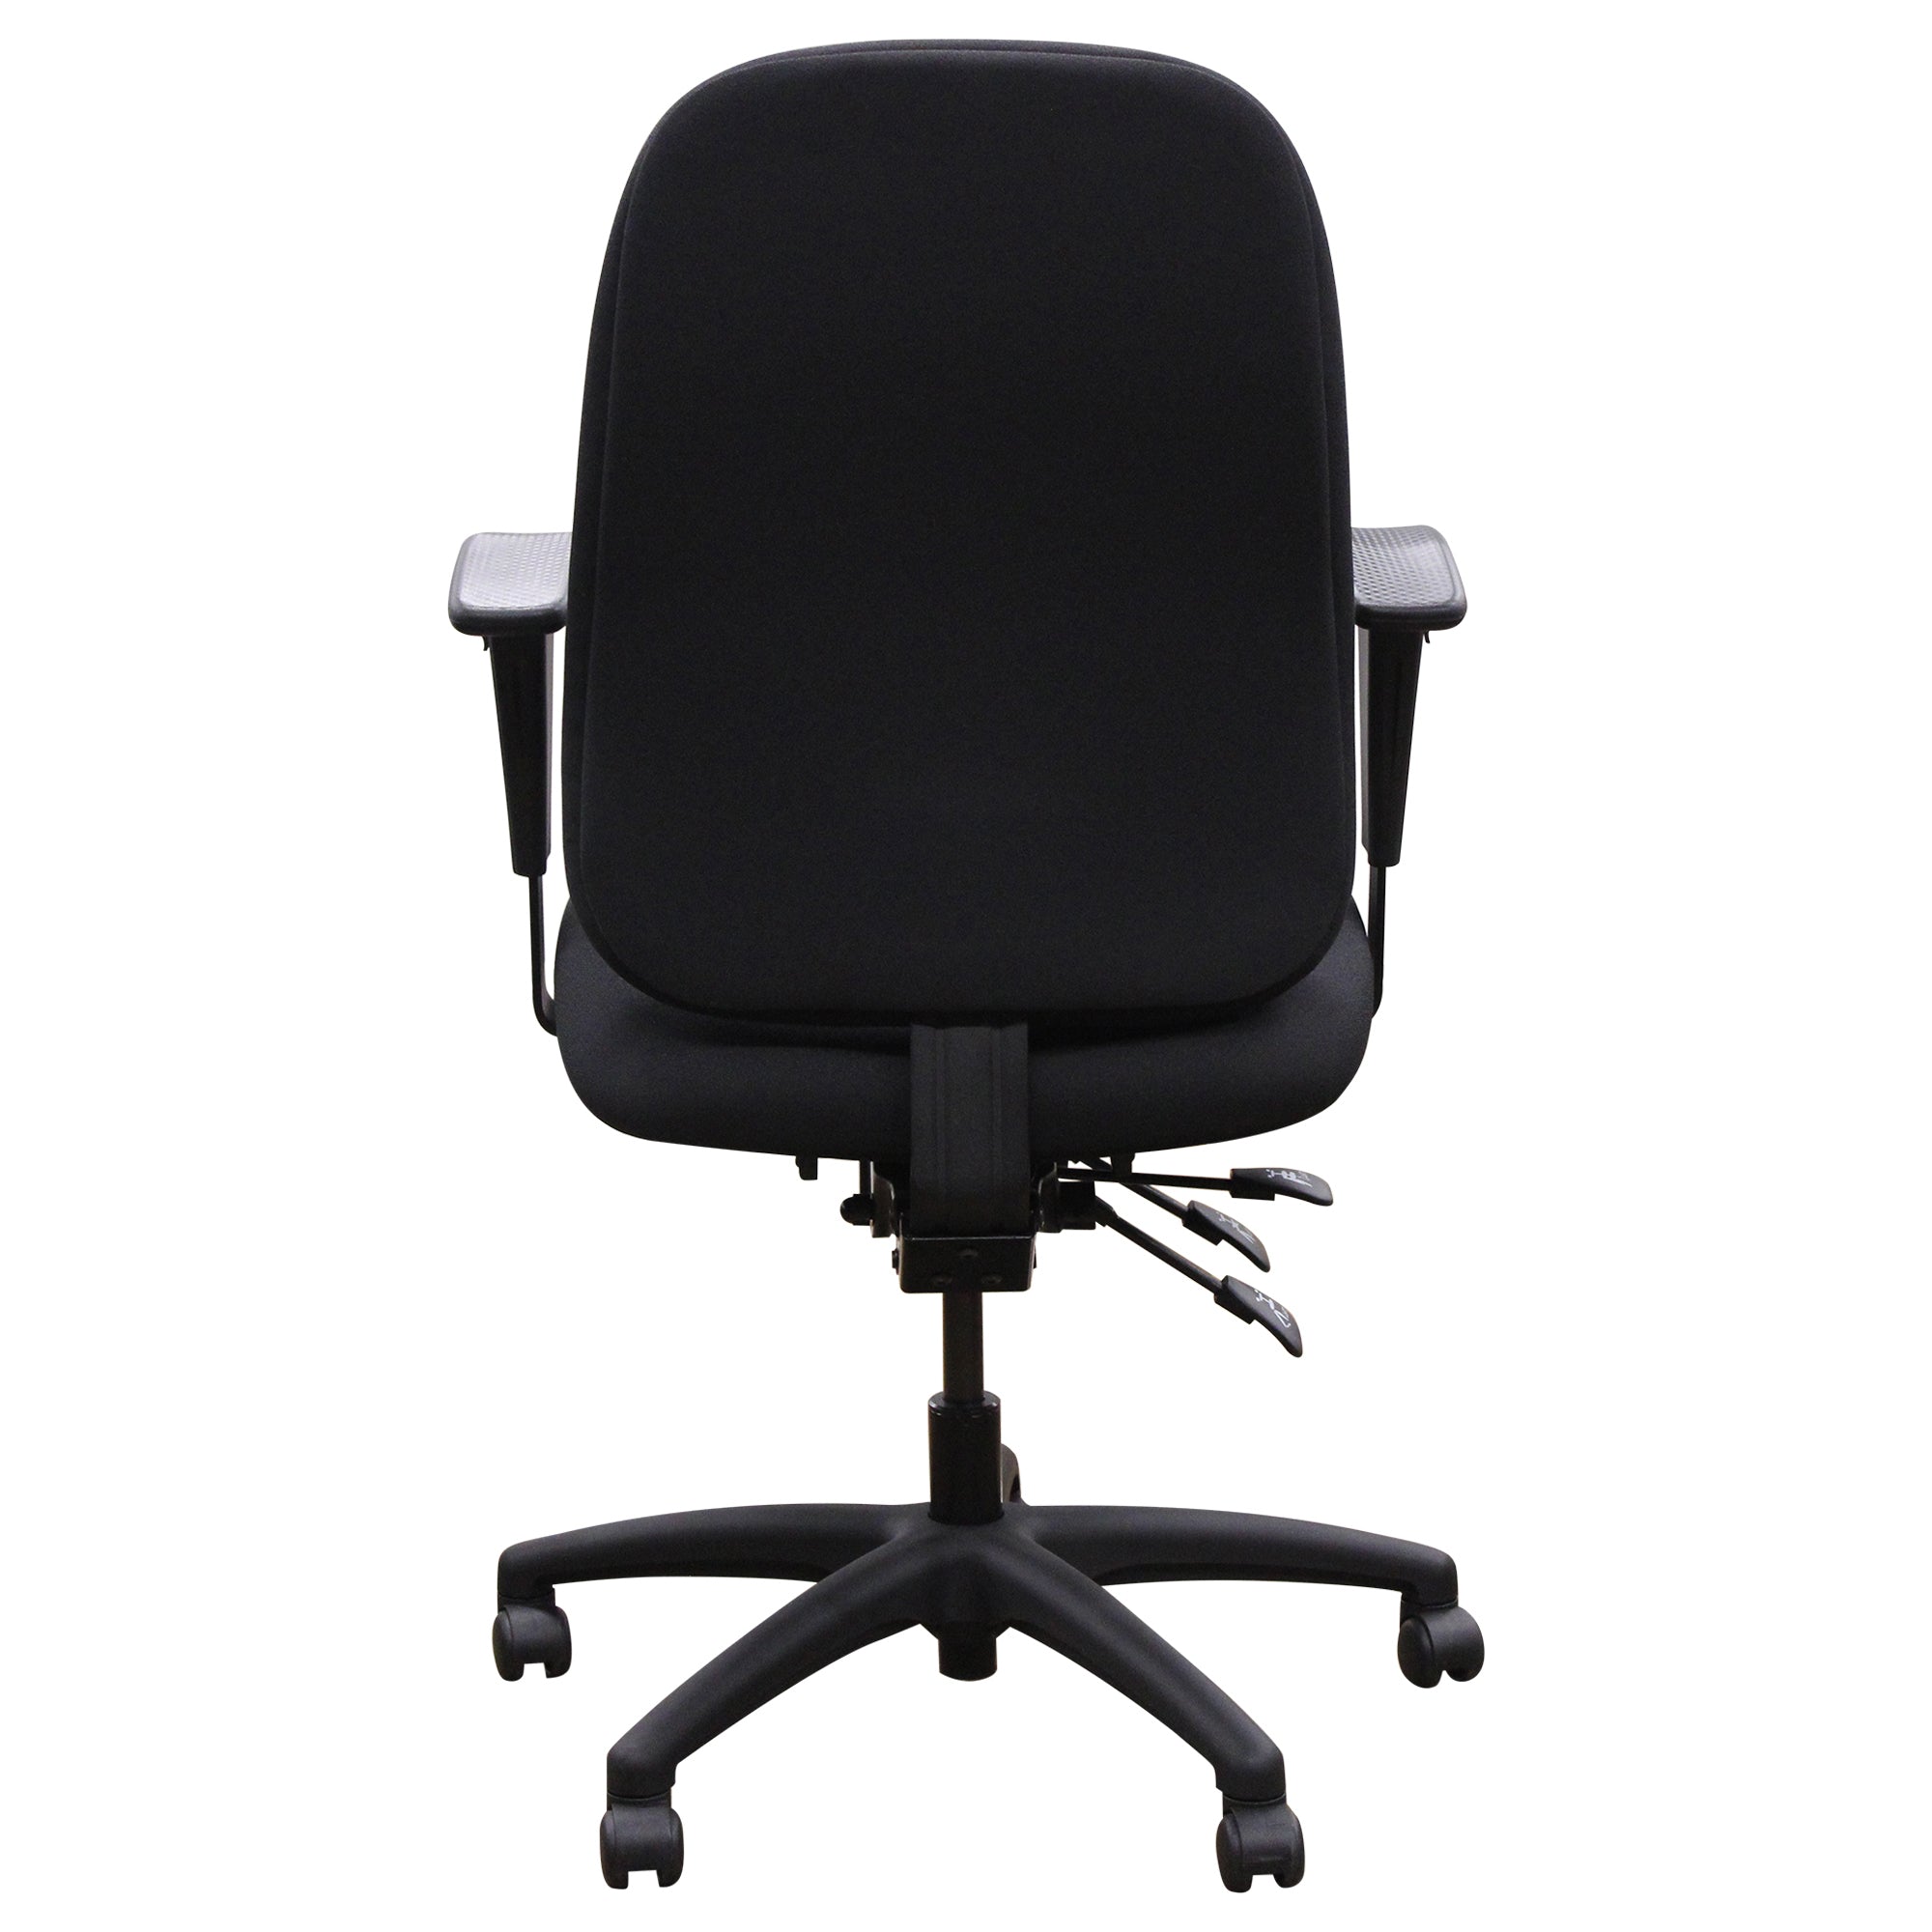 Allsteel Presto Mid Back Task Chair, Black - Preowned